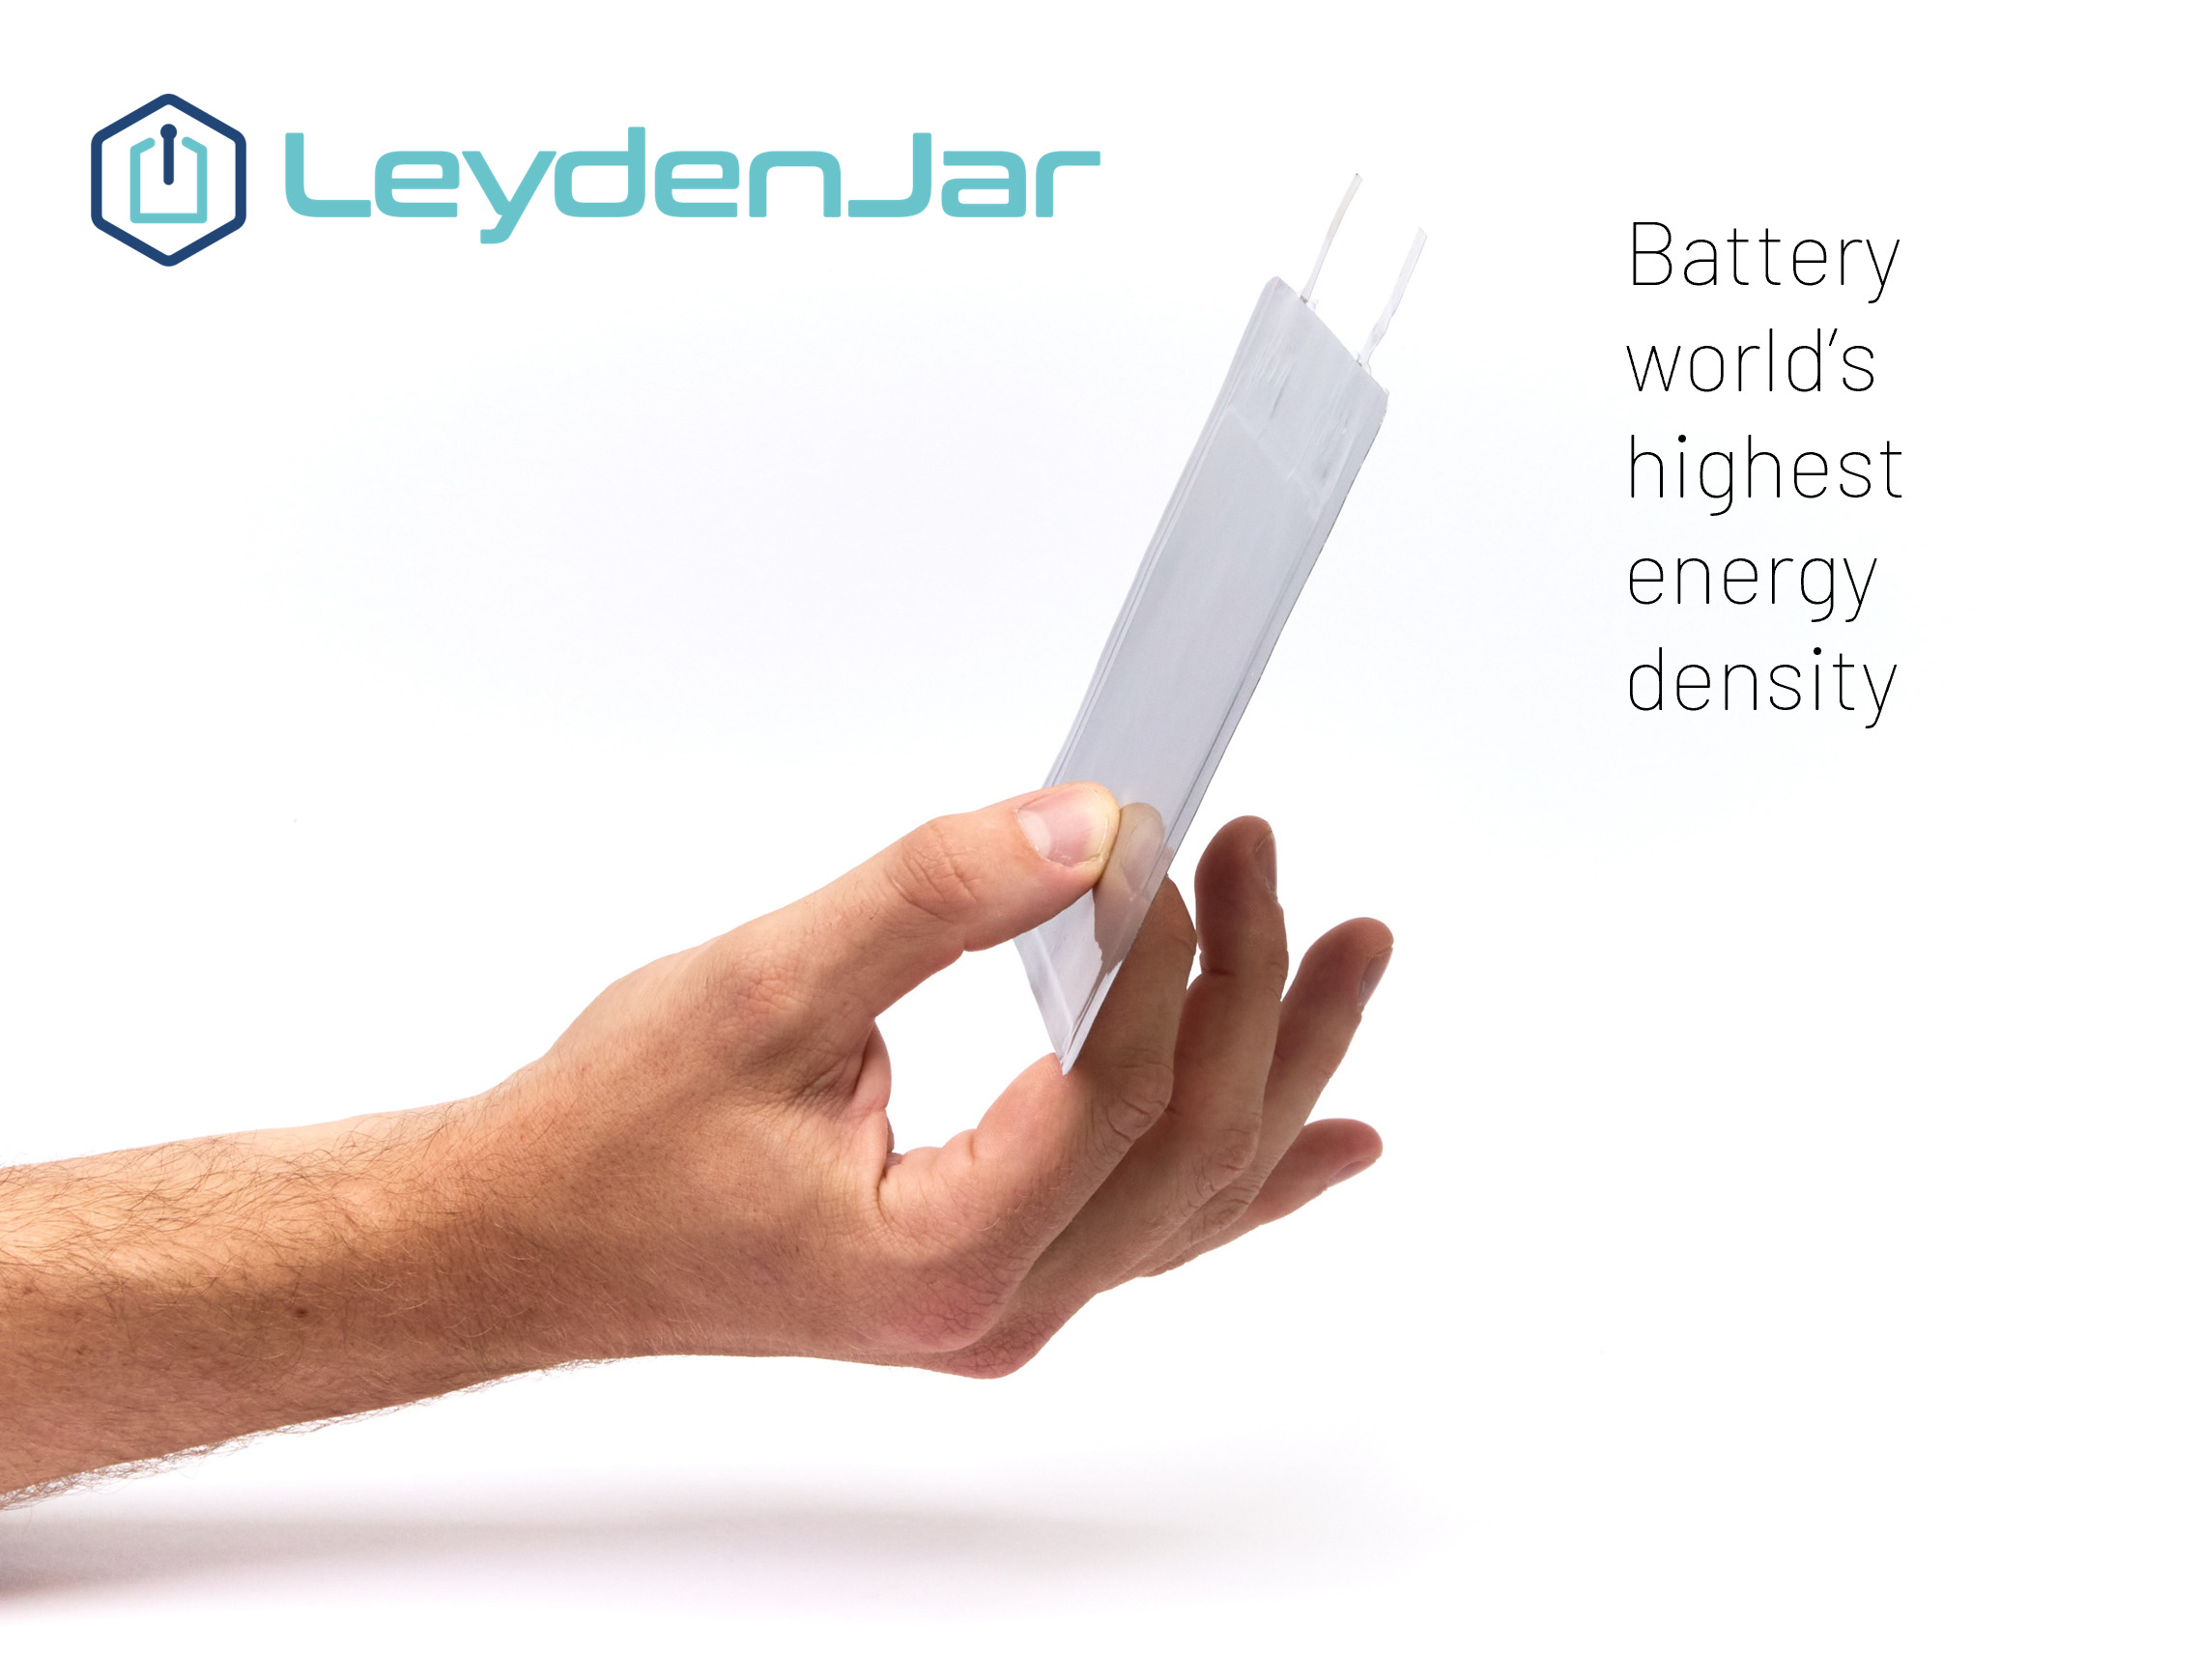 CES 2023 Innovation Award Honoree, LeydenJar, creator of the world's highest energy density battery